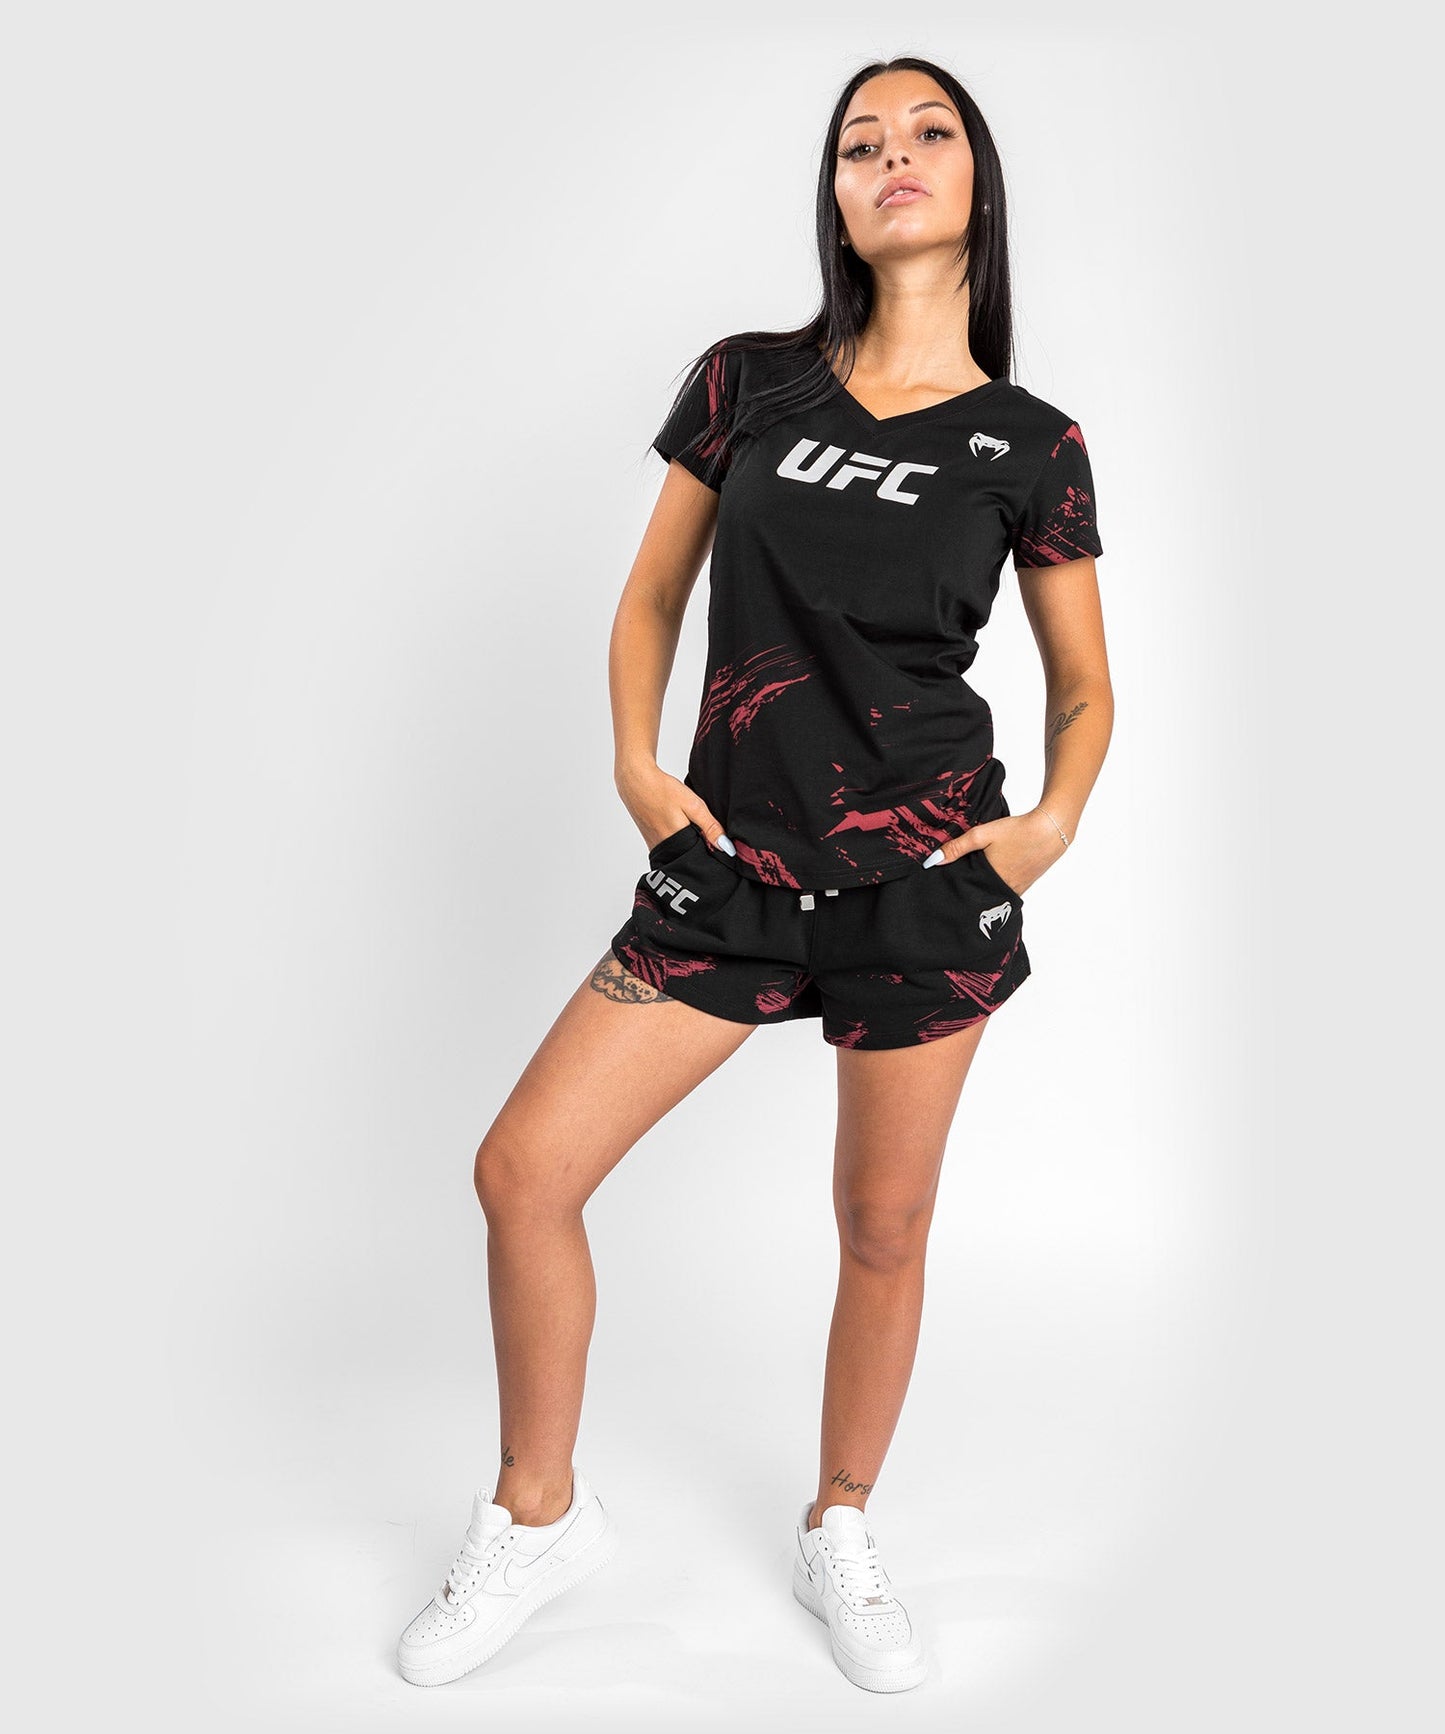 UFC Venum Authentic Fight Week Women’s 2.0 Short Sleeve T-Shirt - Black/Red